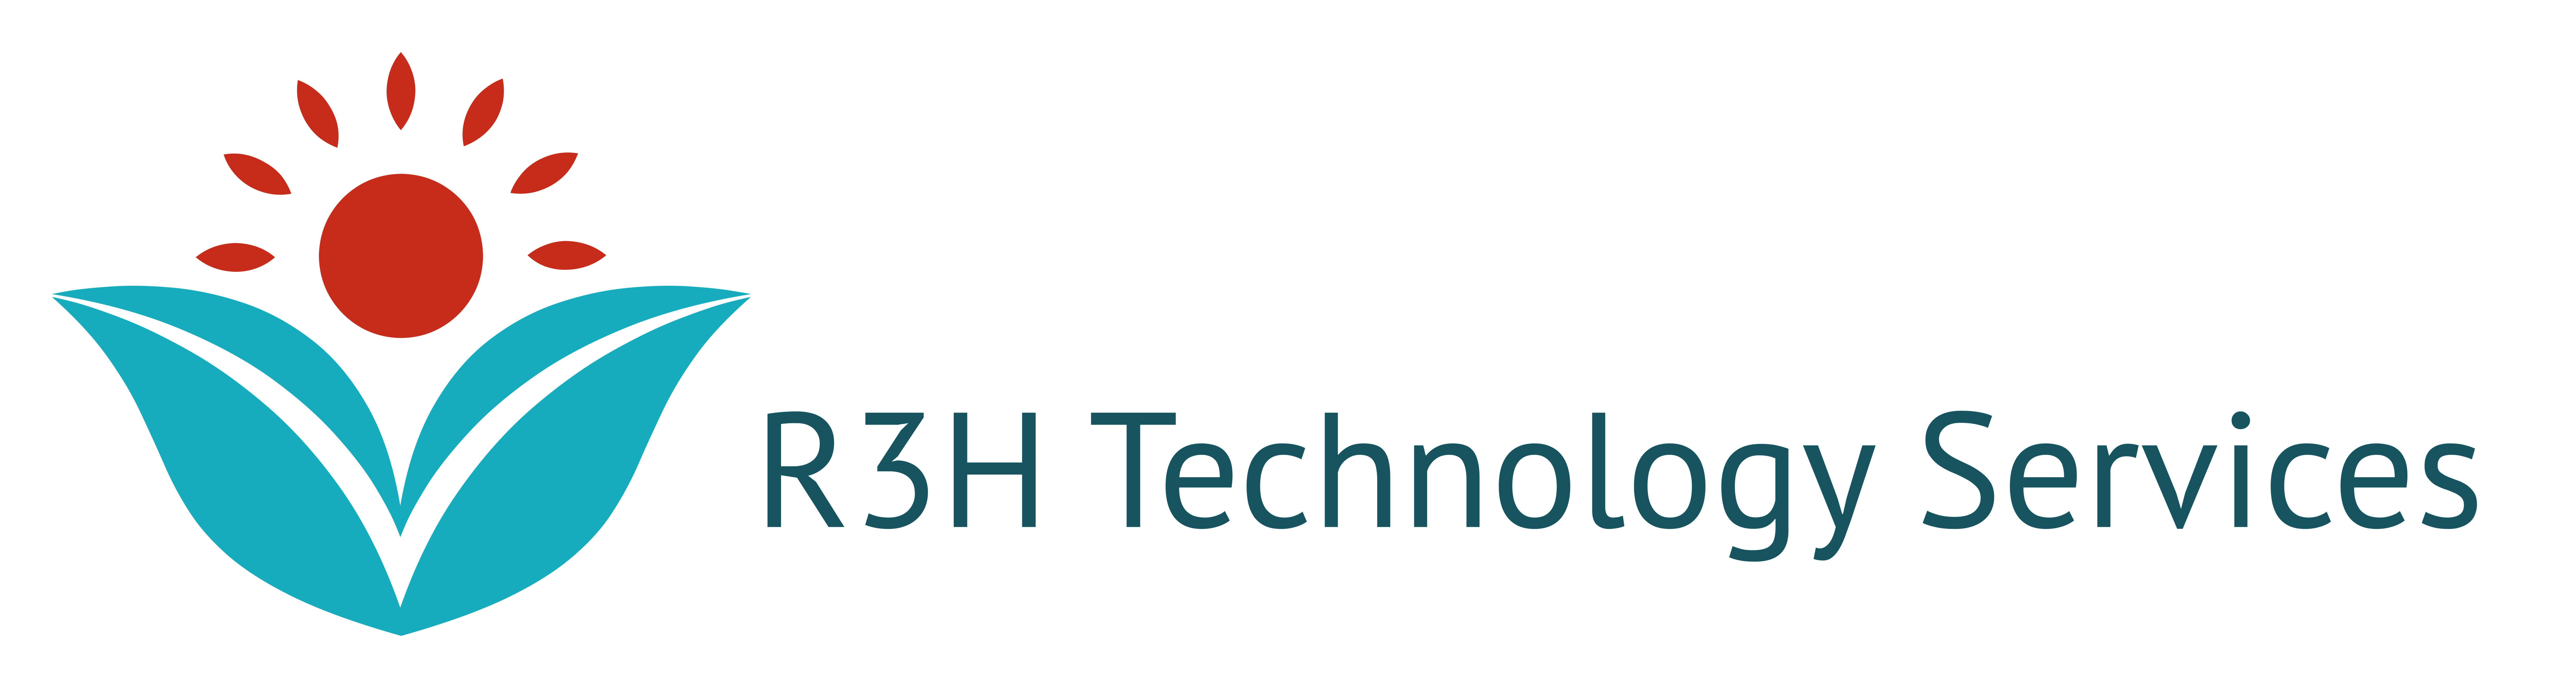 R3H Technologies